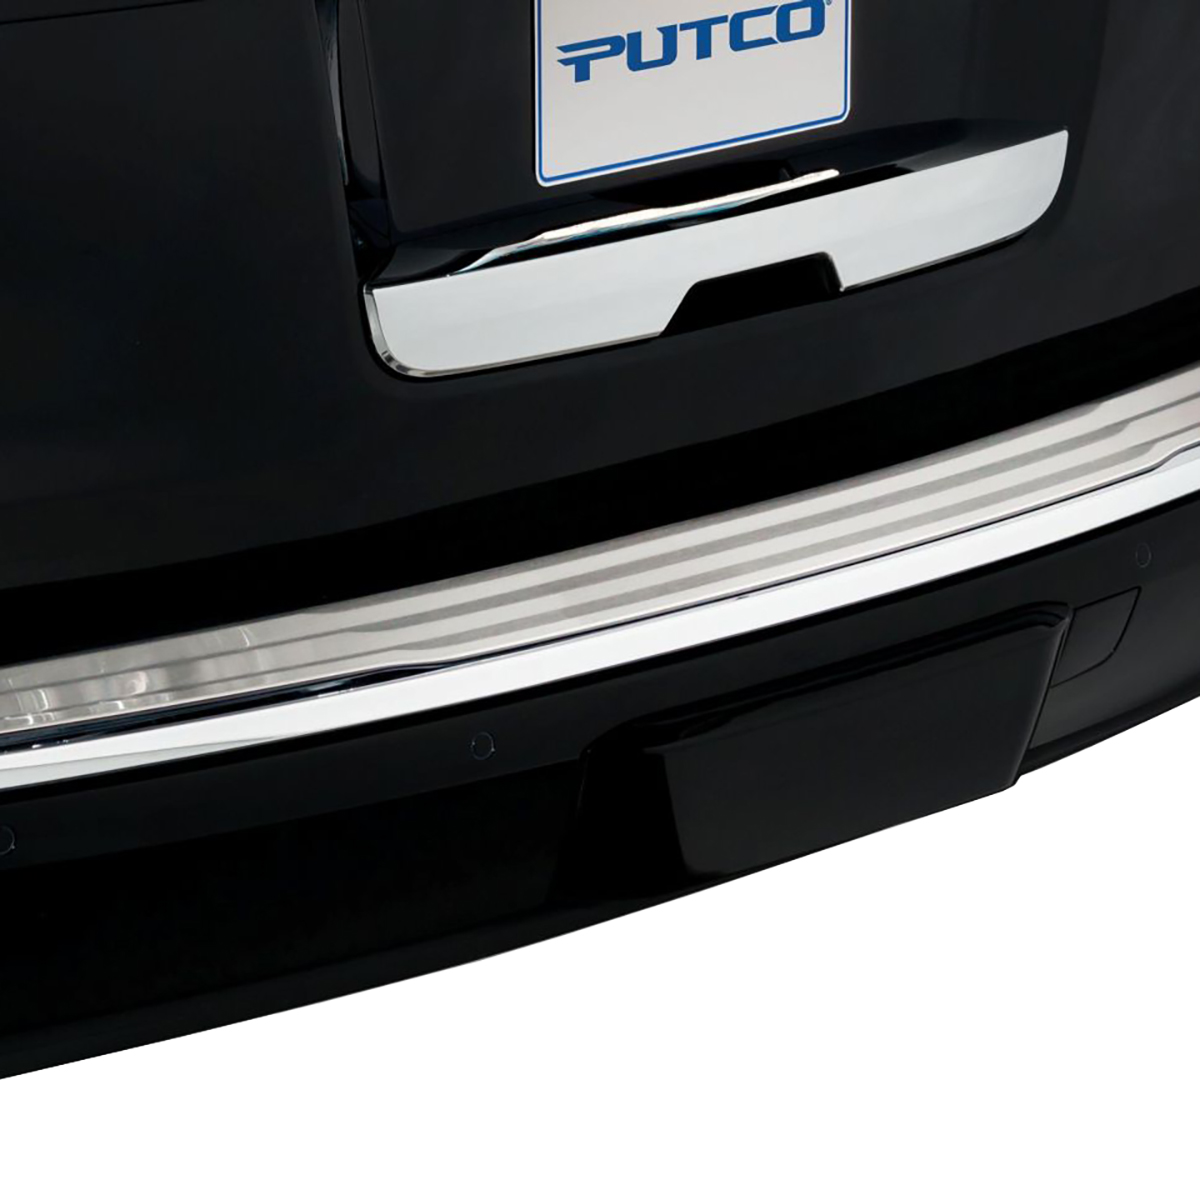 Putco Chrome Tailgate Handle Covers